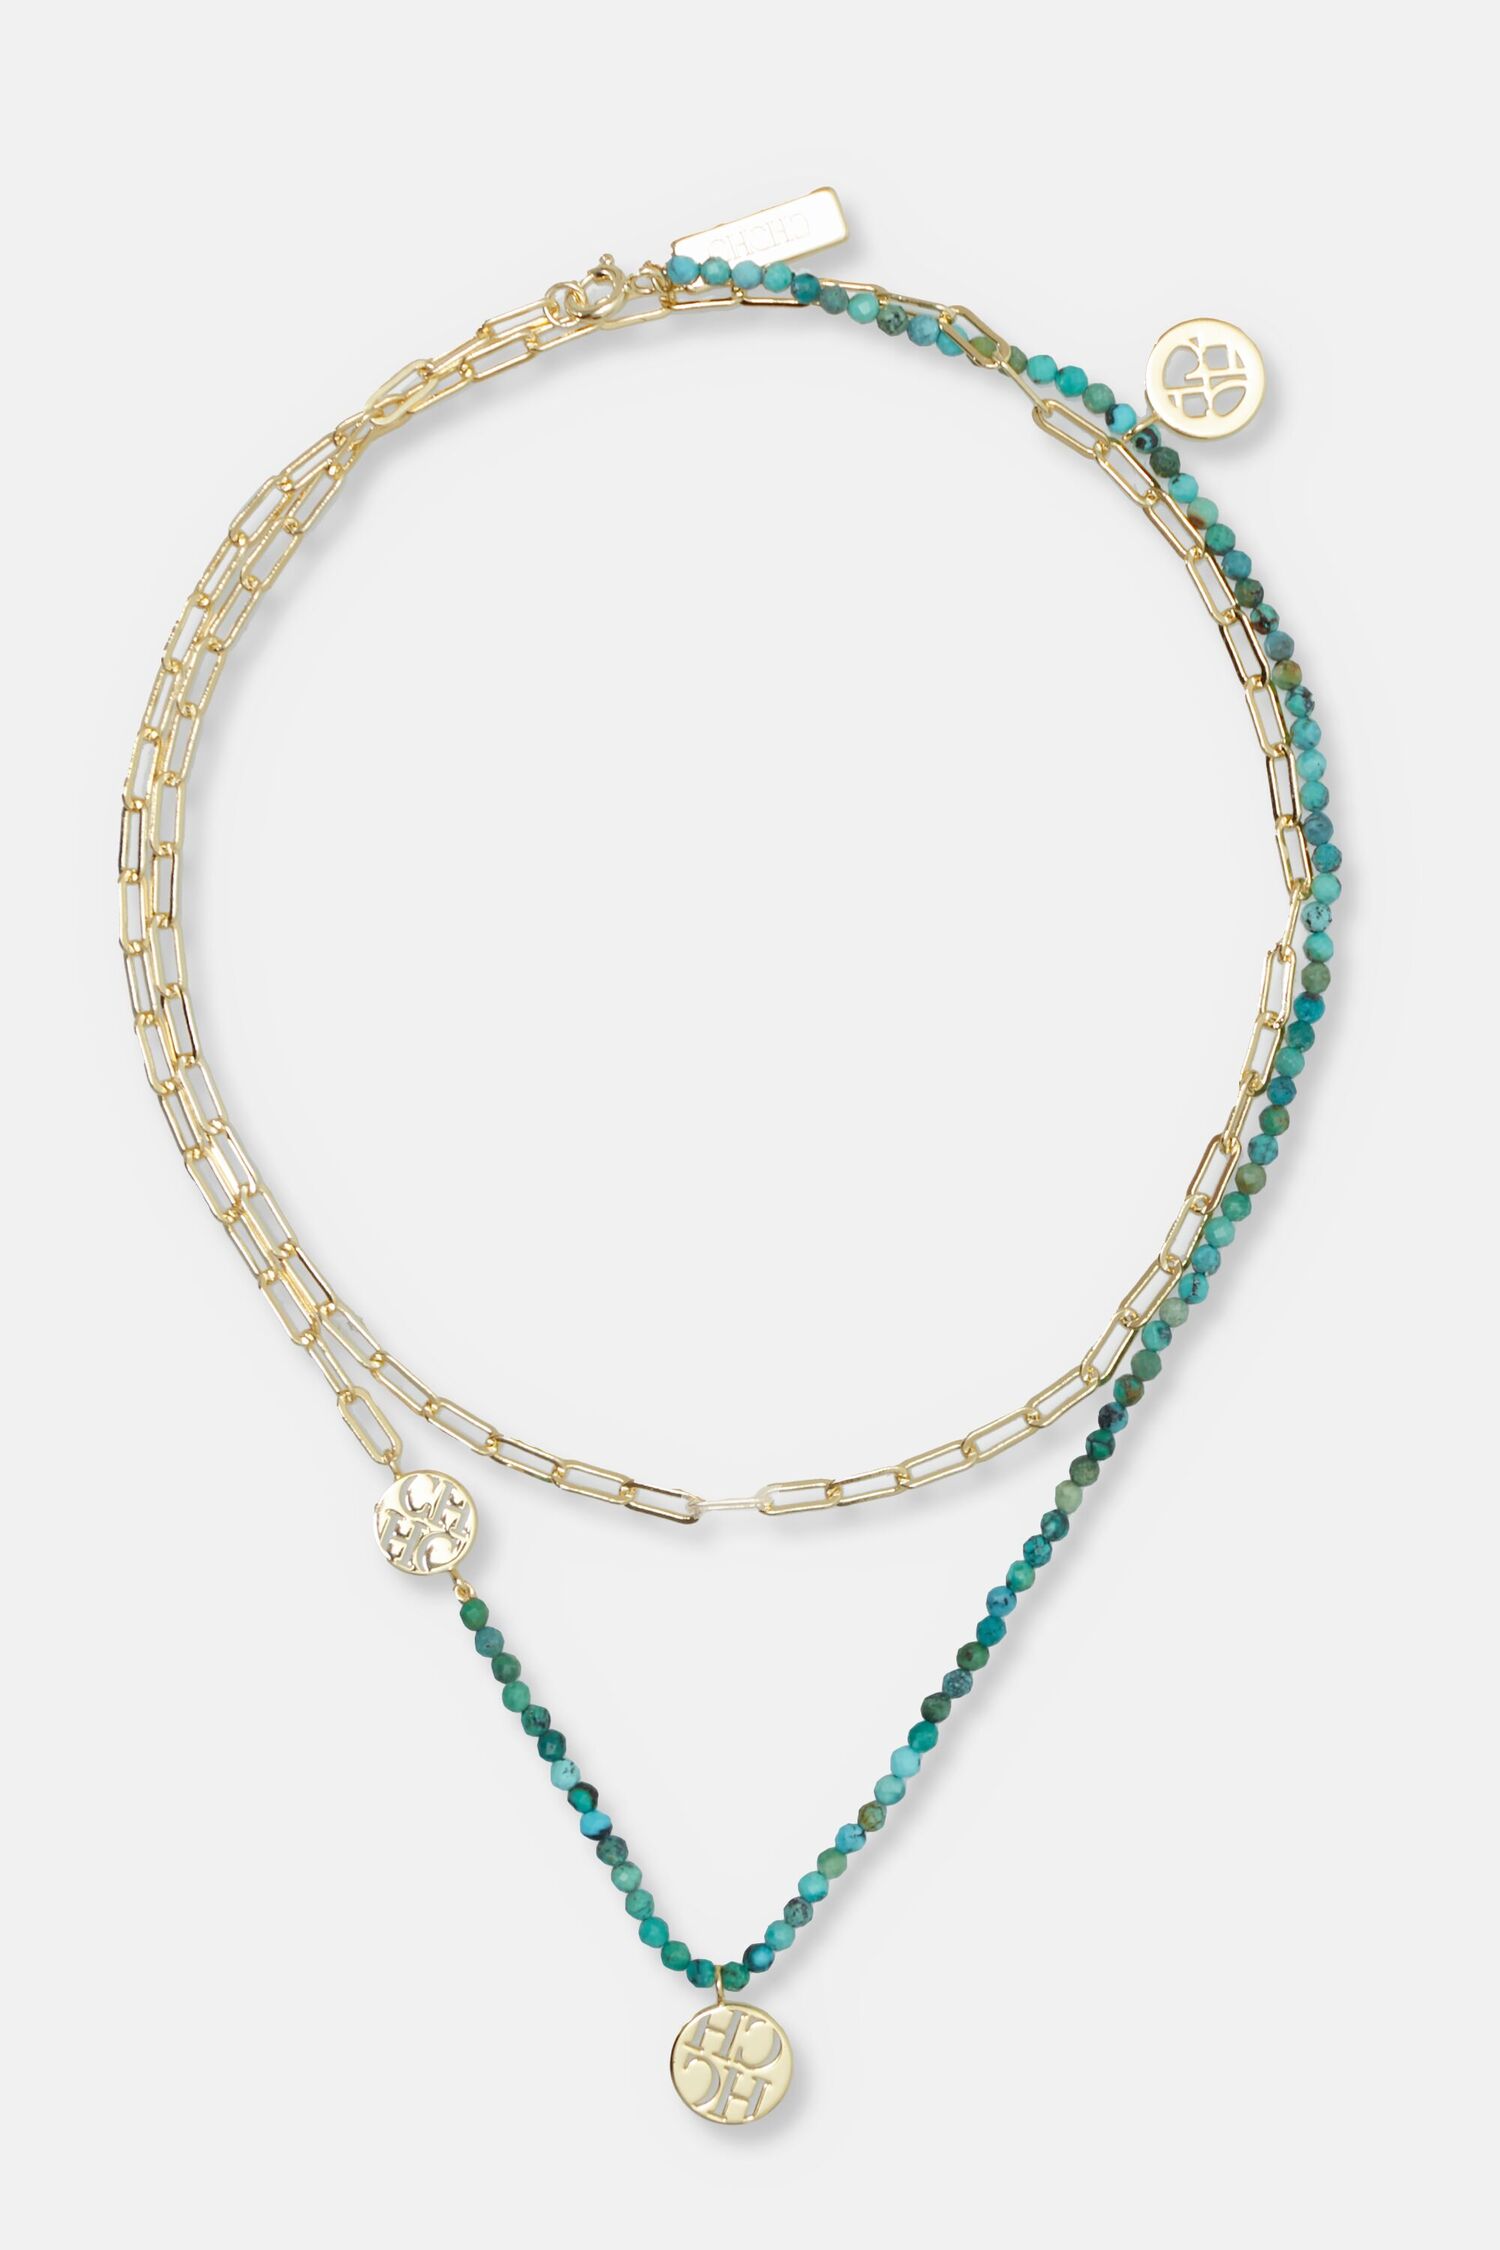 New Carolina Herrera summer necklace